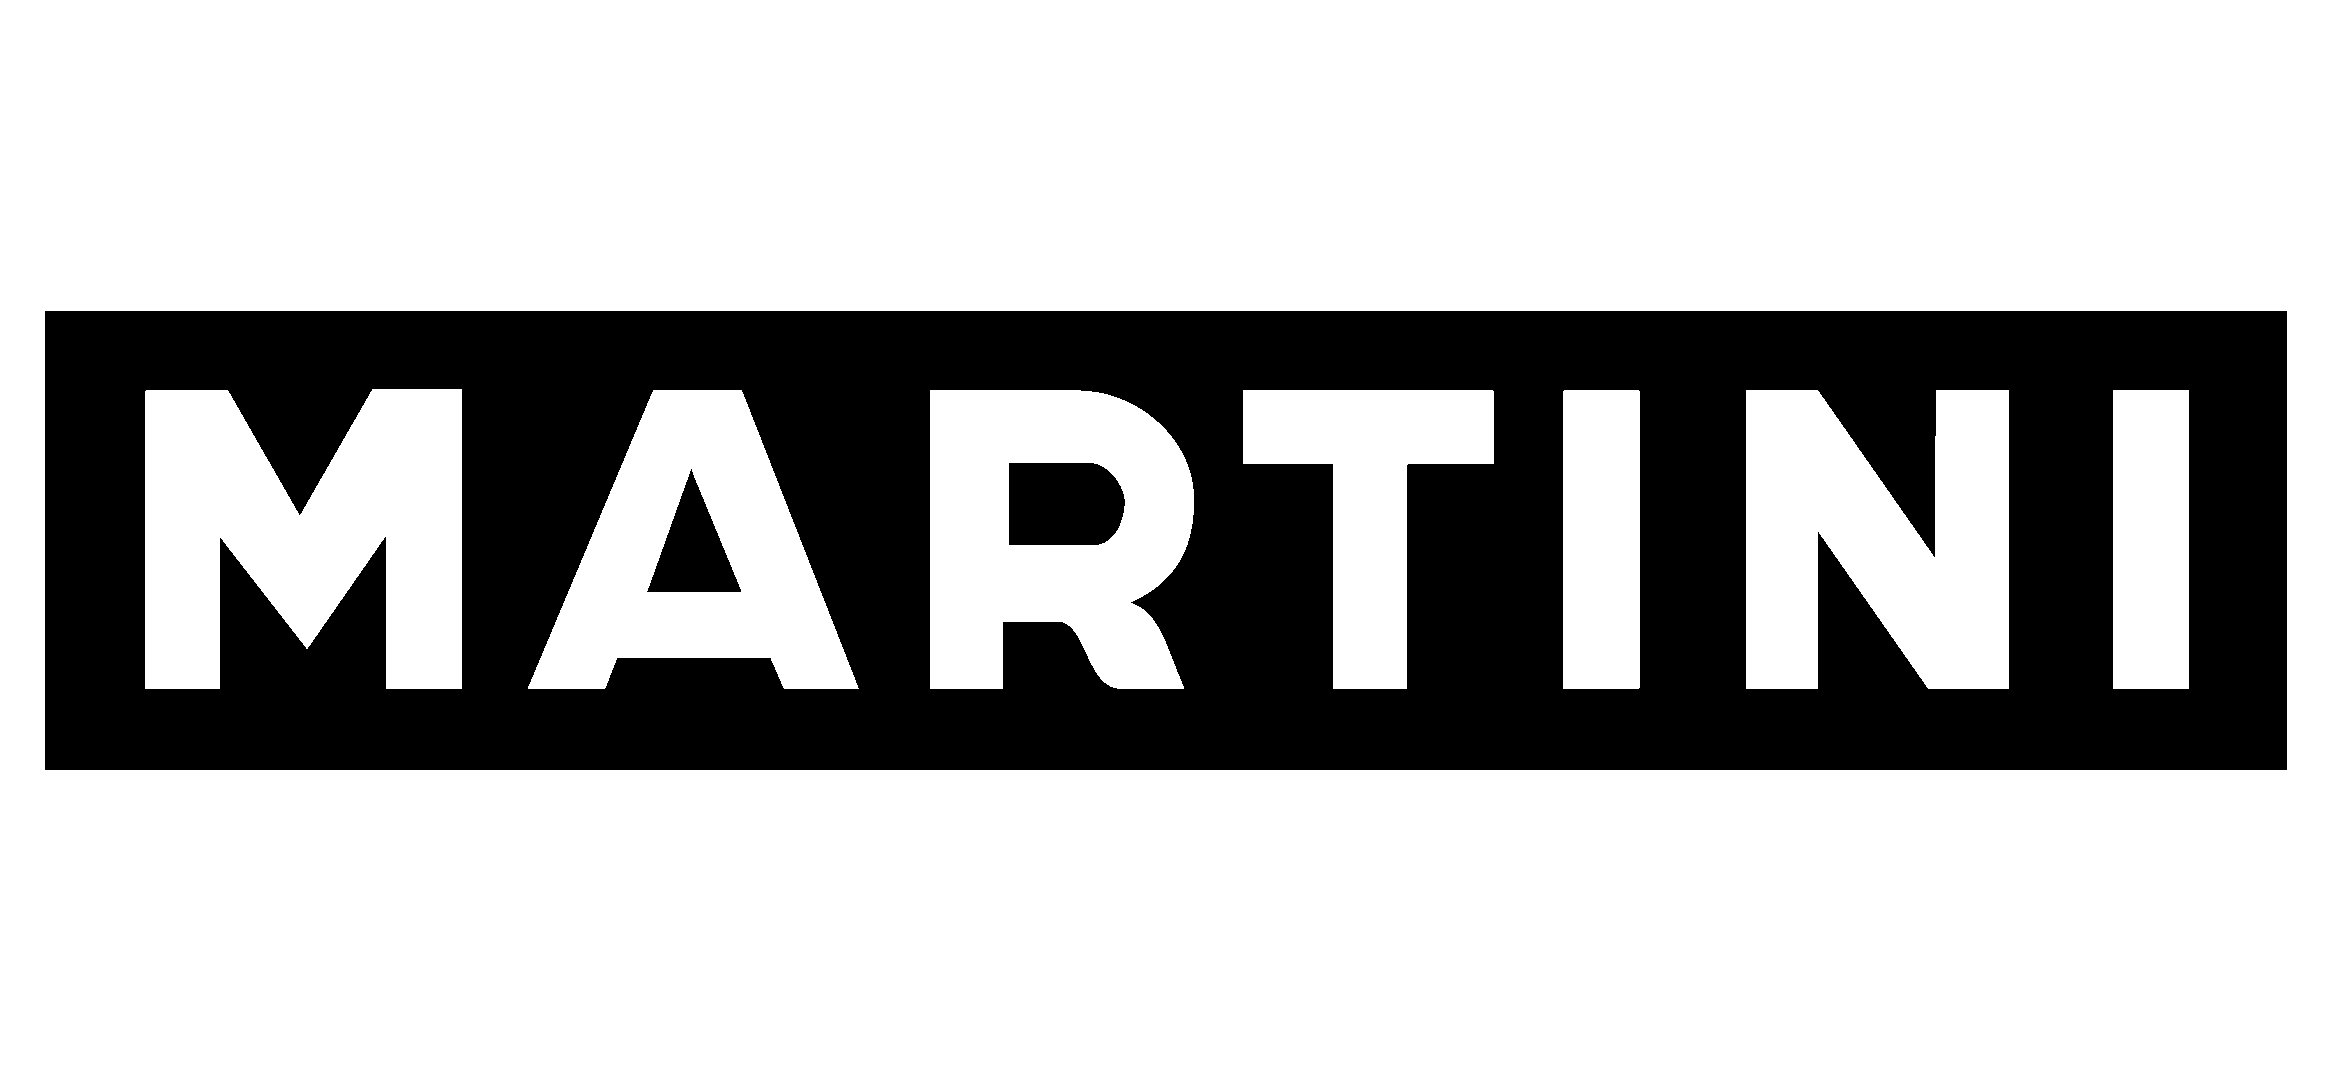 Martini Logo Black And White Martini Logo Png